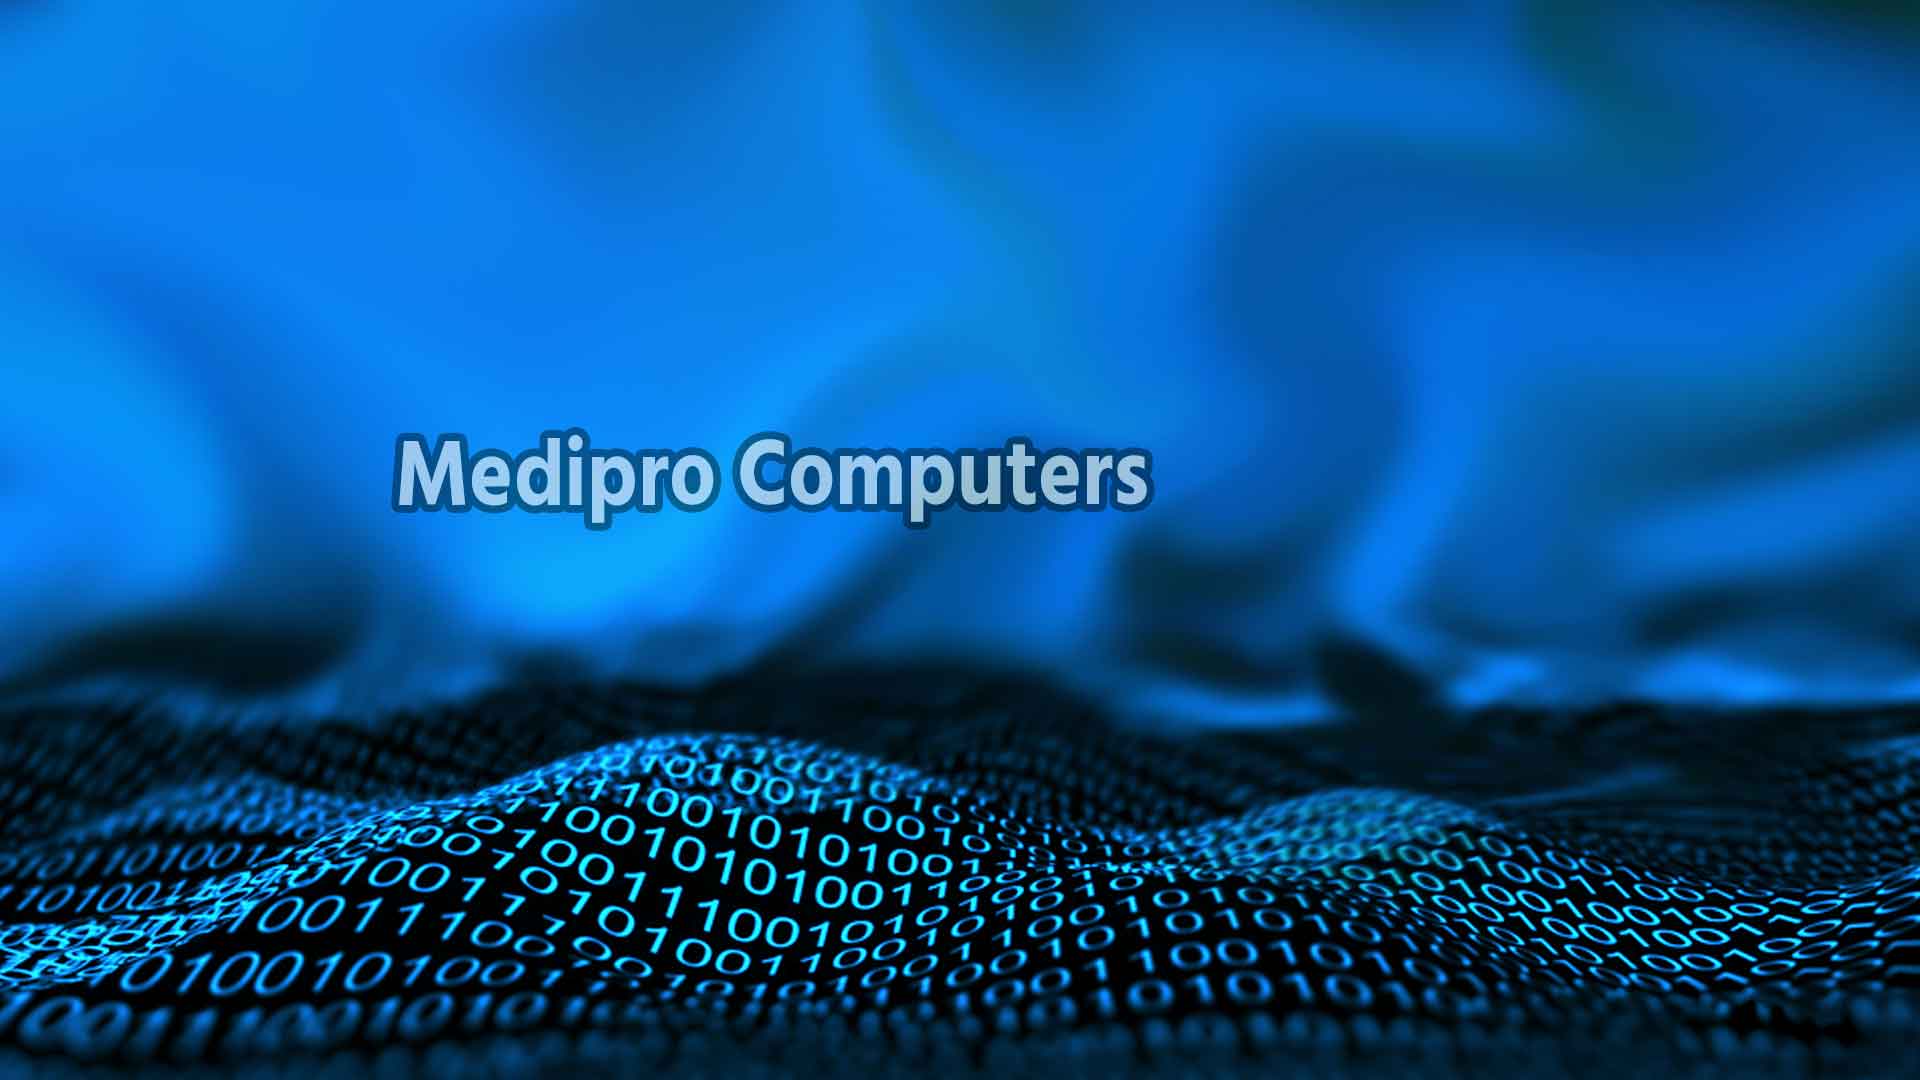 Medipro Computers Image